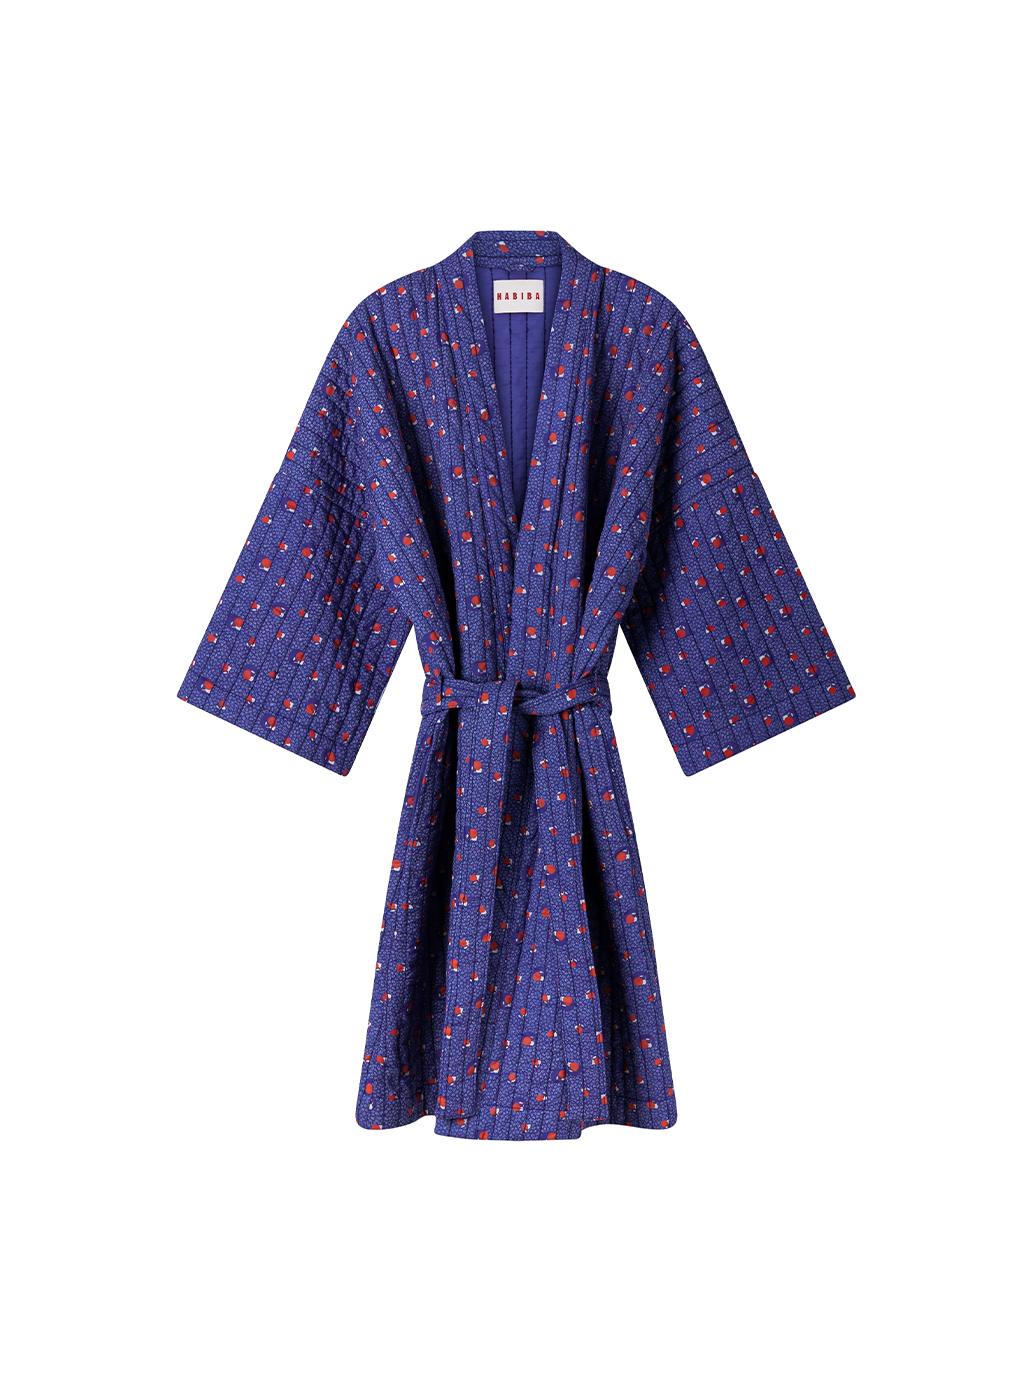 Quilted kimono